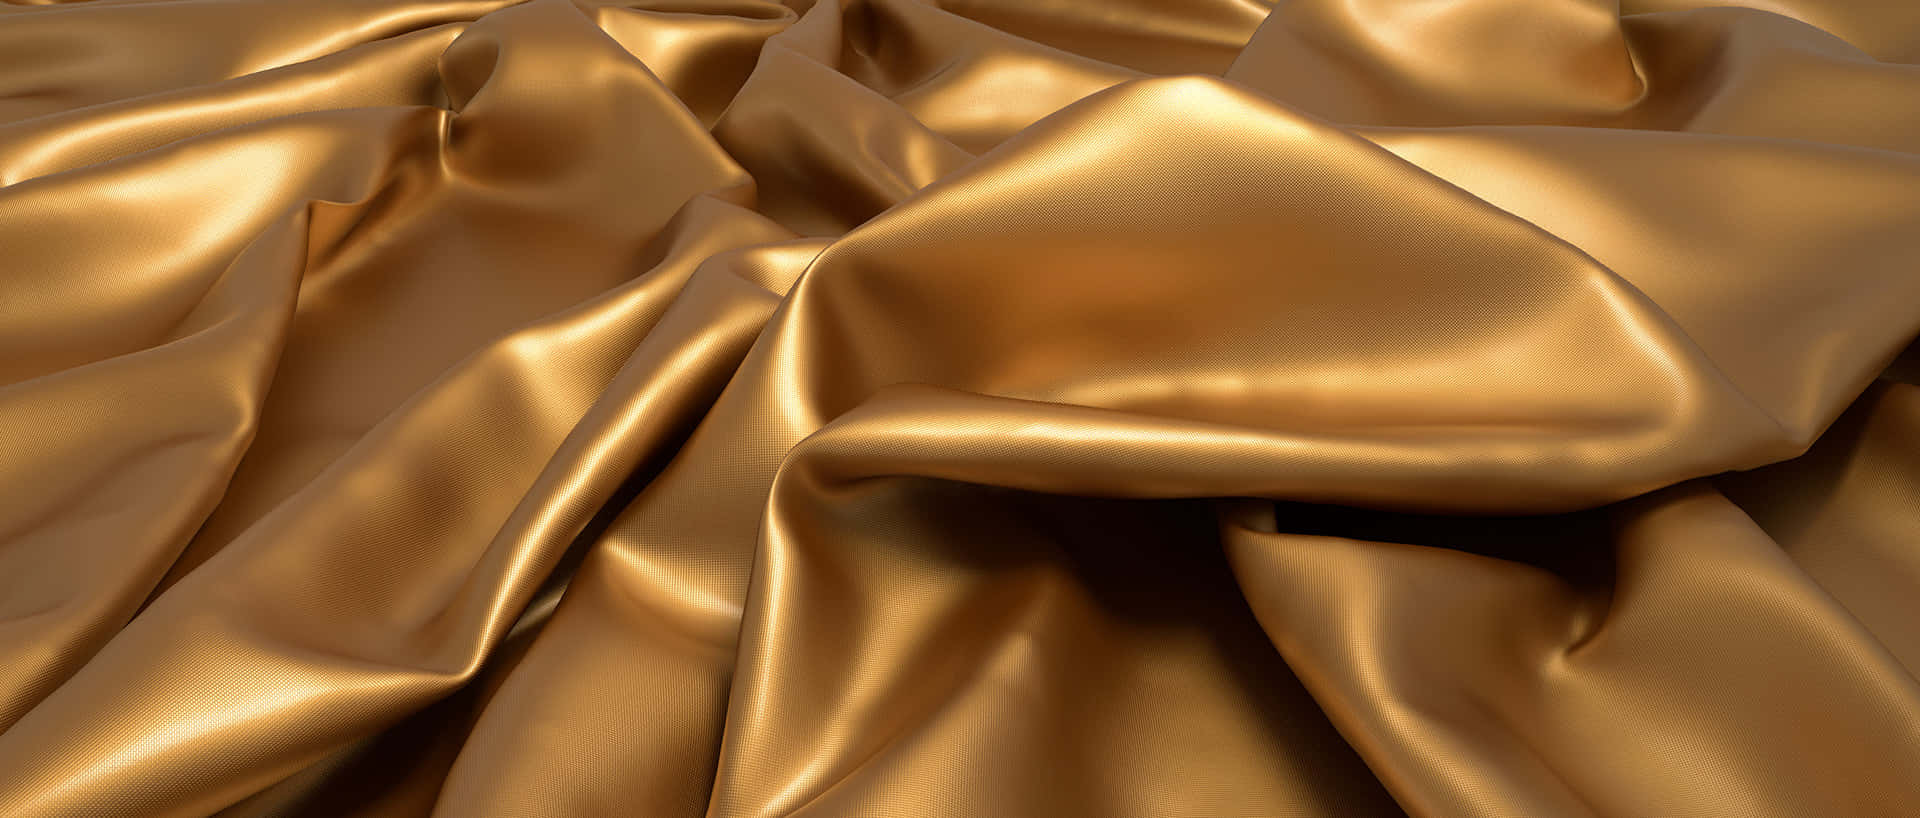 Luxury Gold Silk Fabric Wallpaper